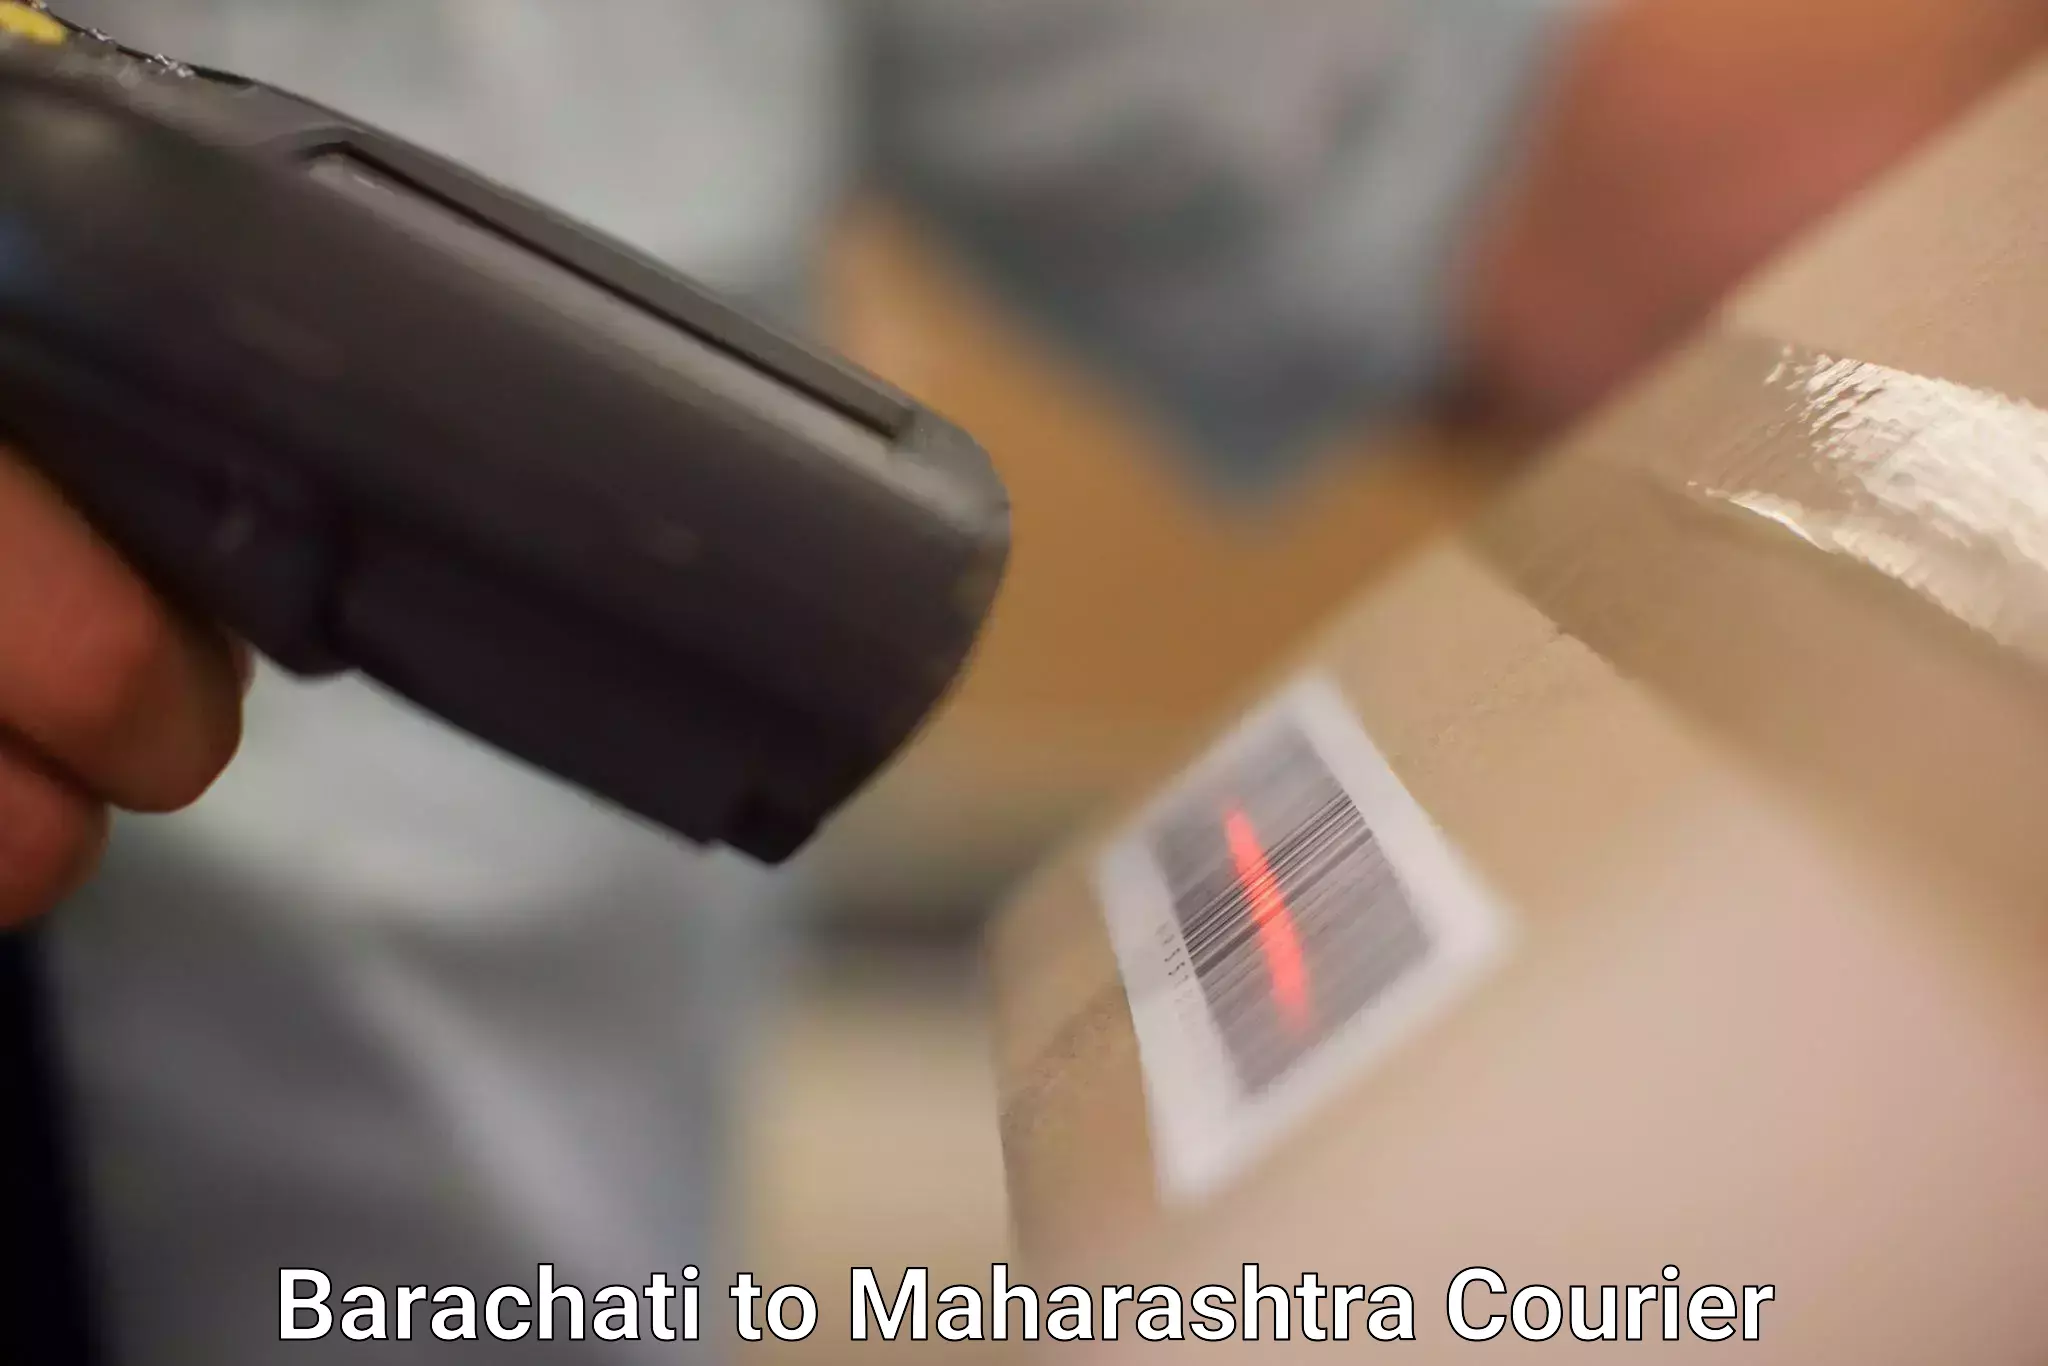 Express postal services Barachati to Tata Institute of Social Sciences Mumbai